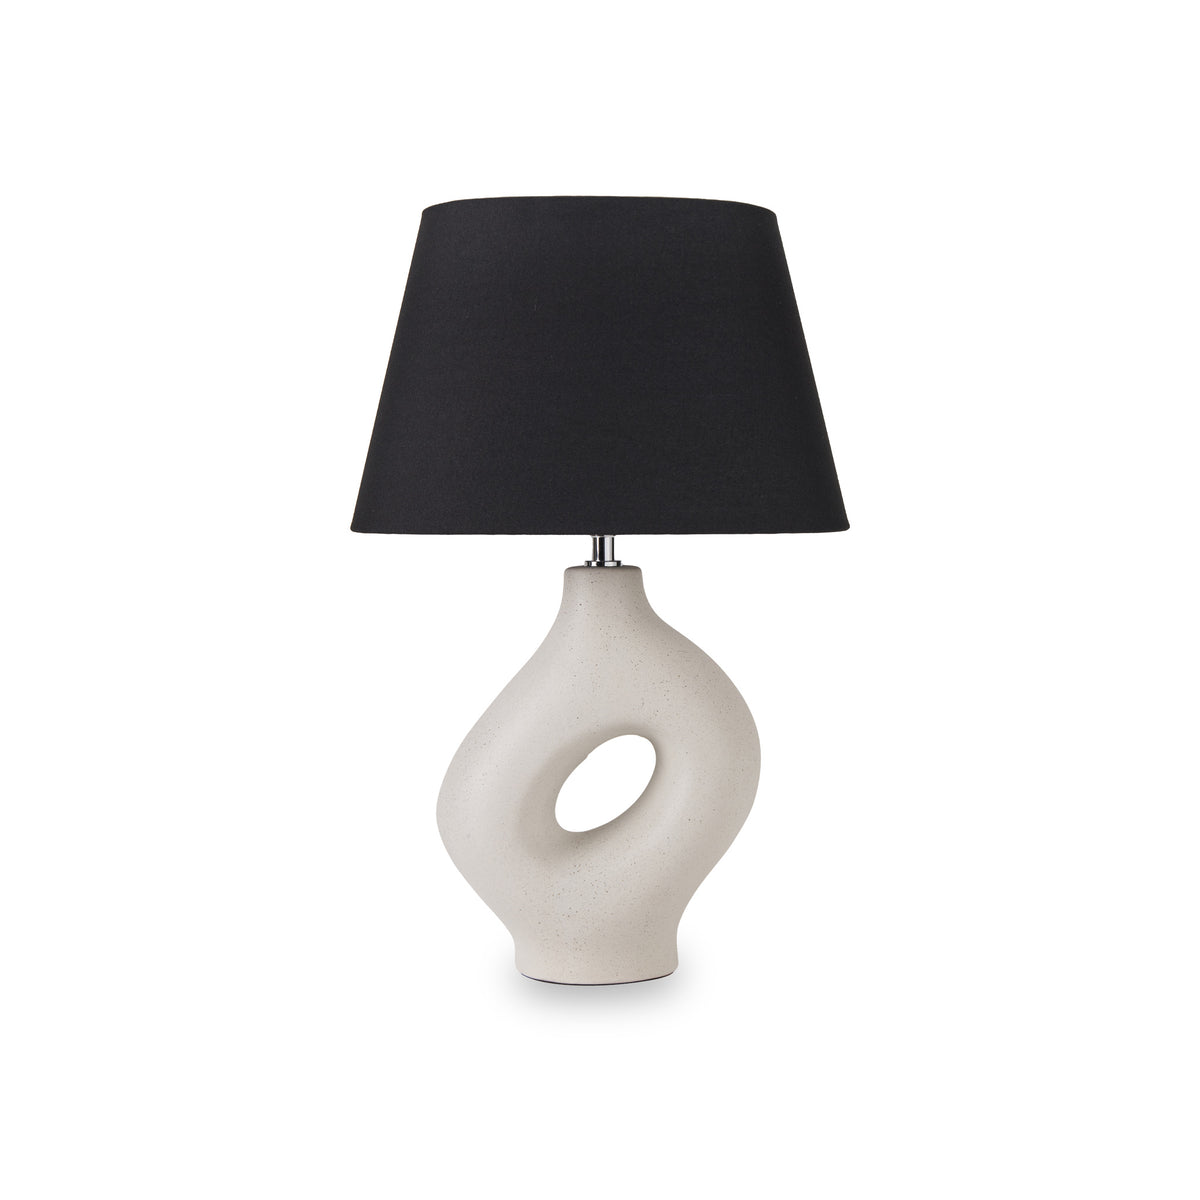 Ulla Monochrome Organic Ceramic Table Lamp from Roseland Furniture